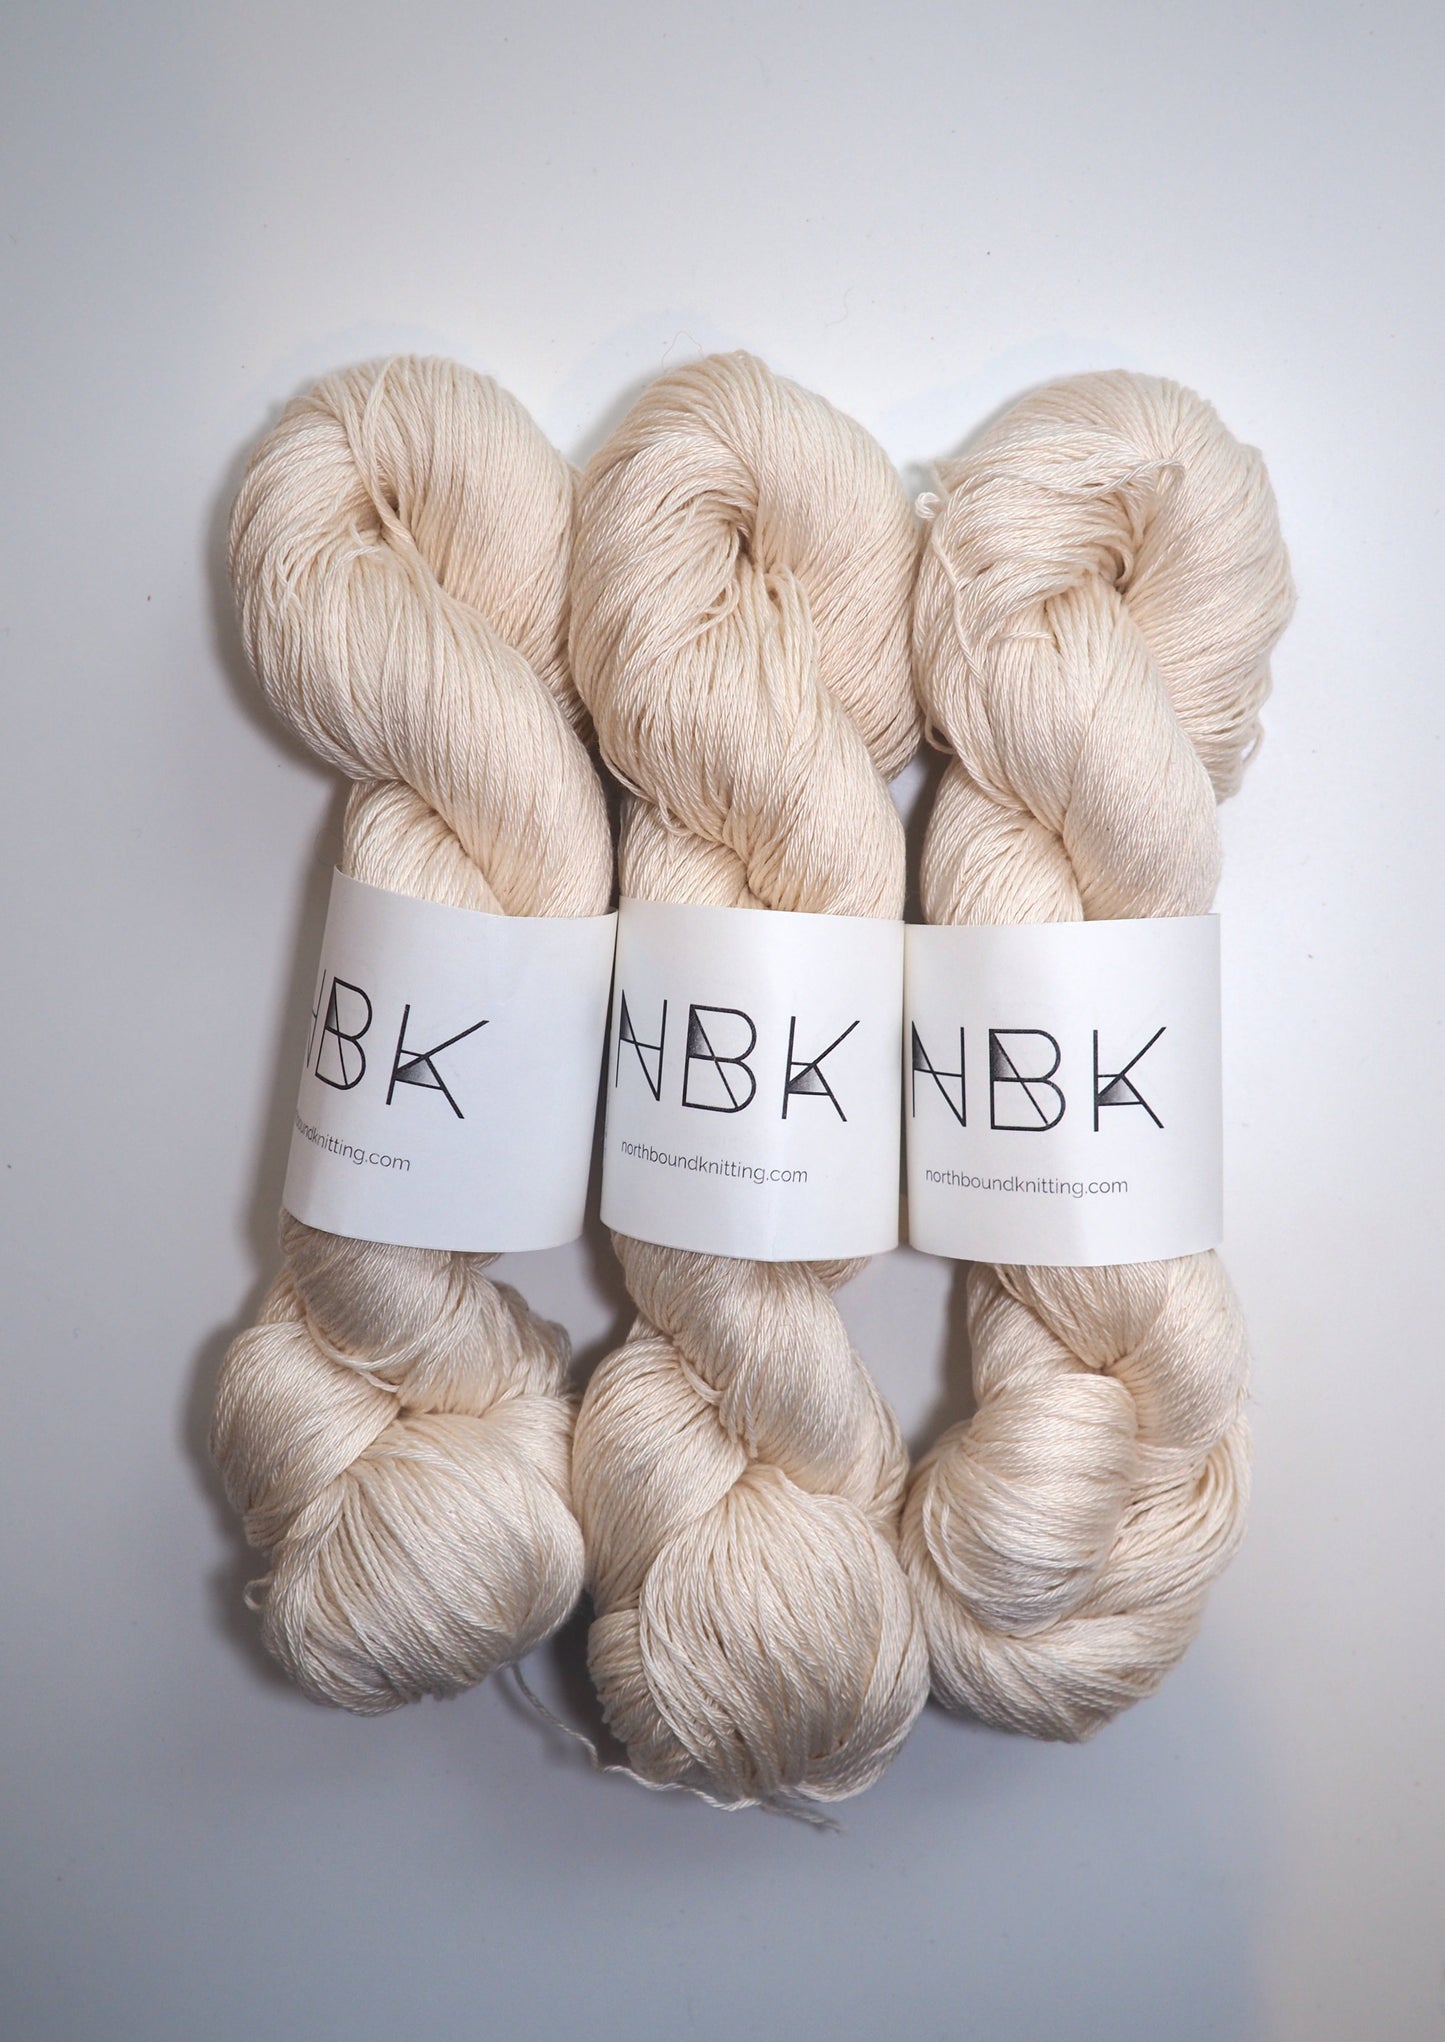 Northbound Knitting Cotton Fingering